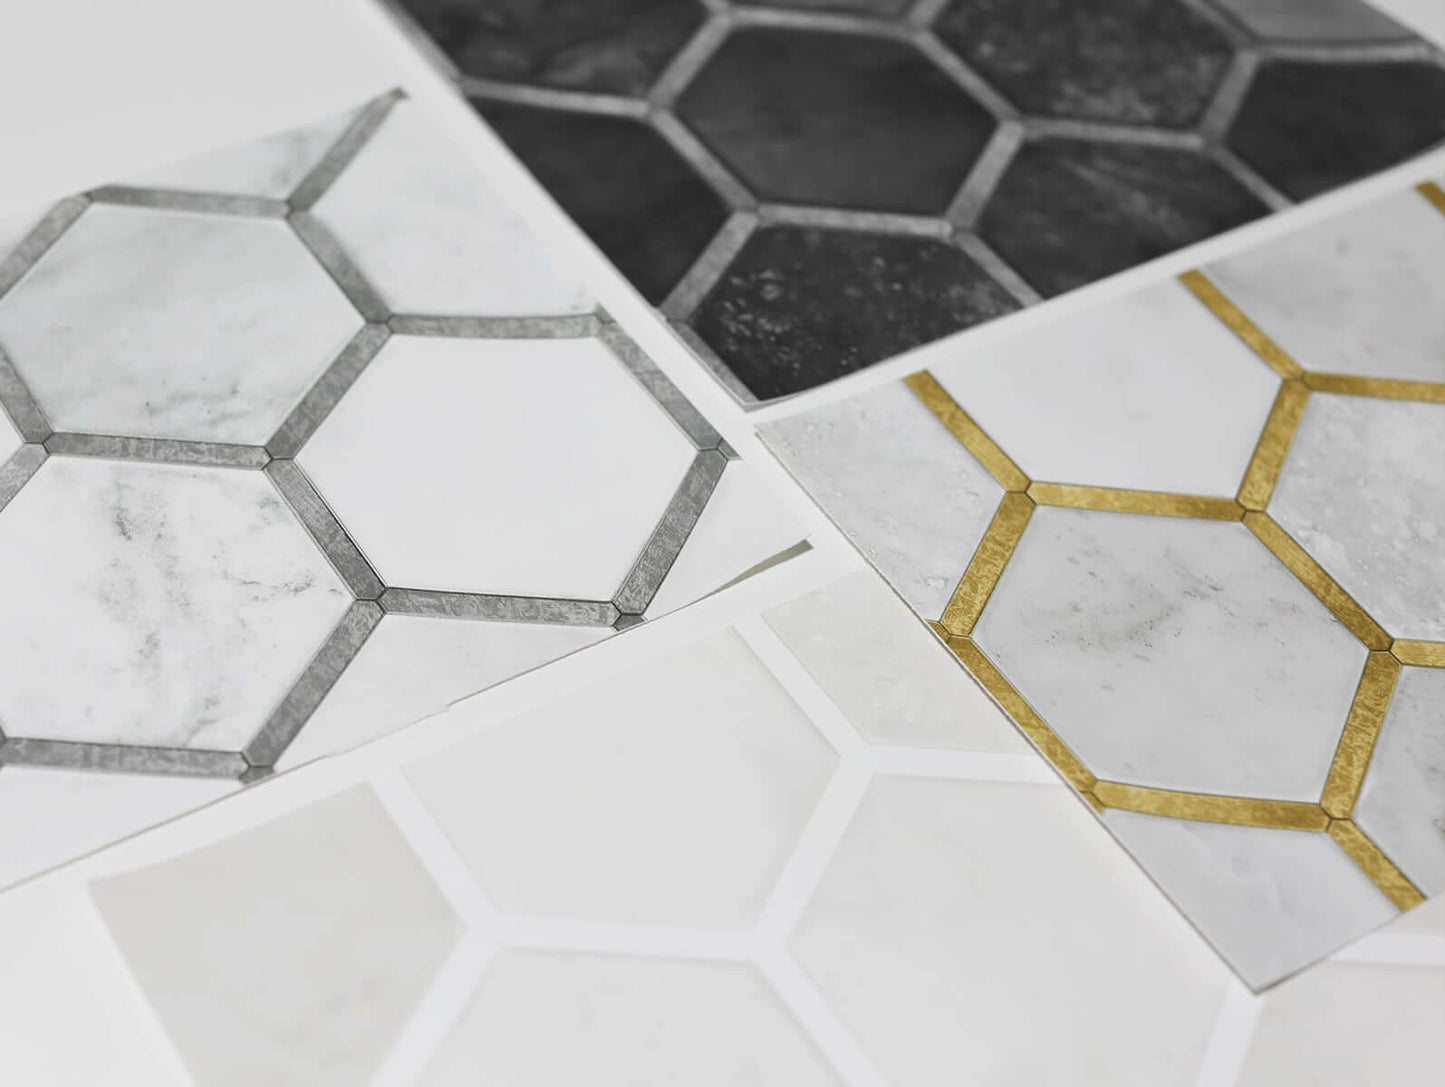 NextWall Inlay Hexagon Peel & Stick Wallpaper - Grey